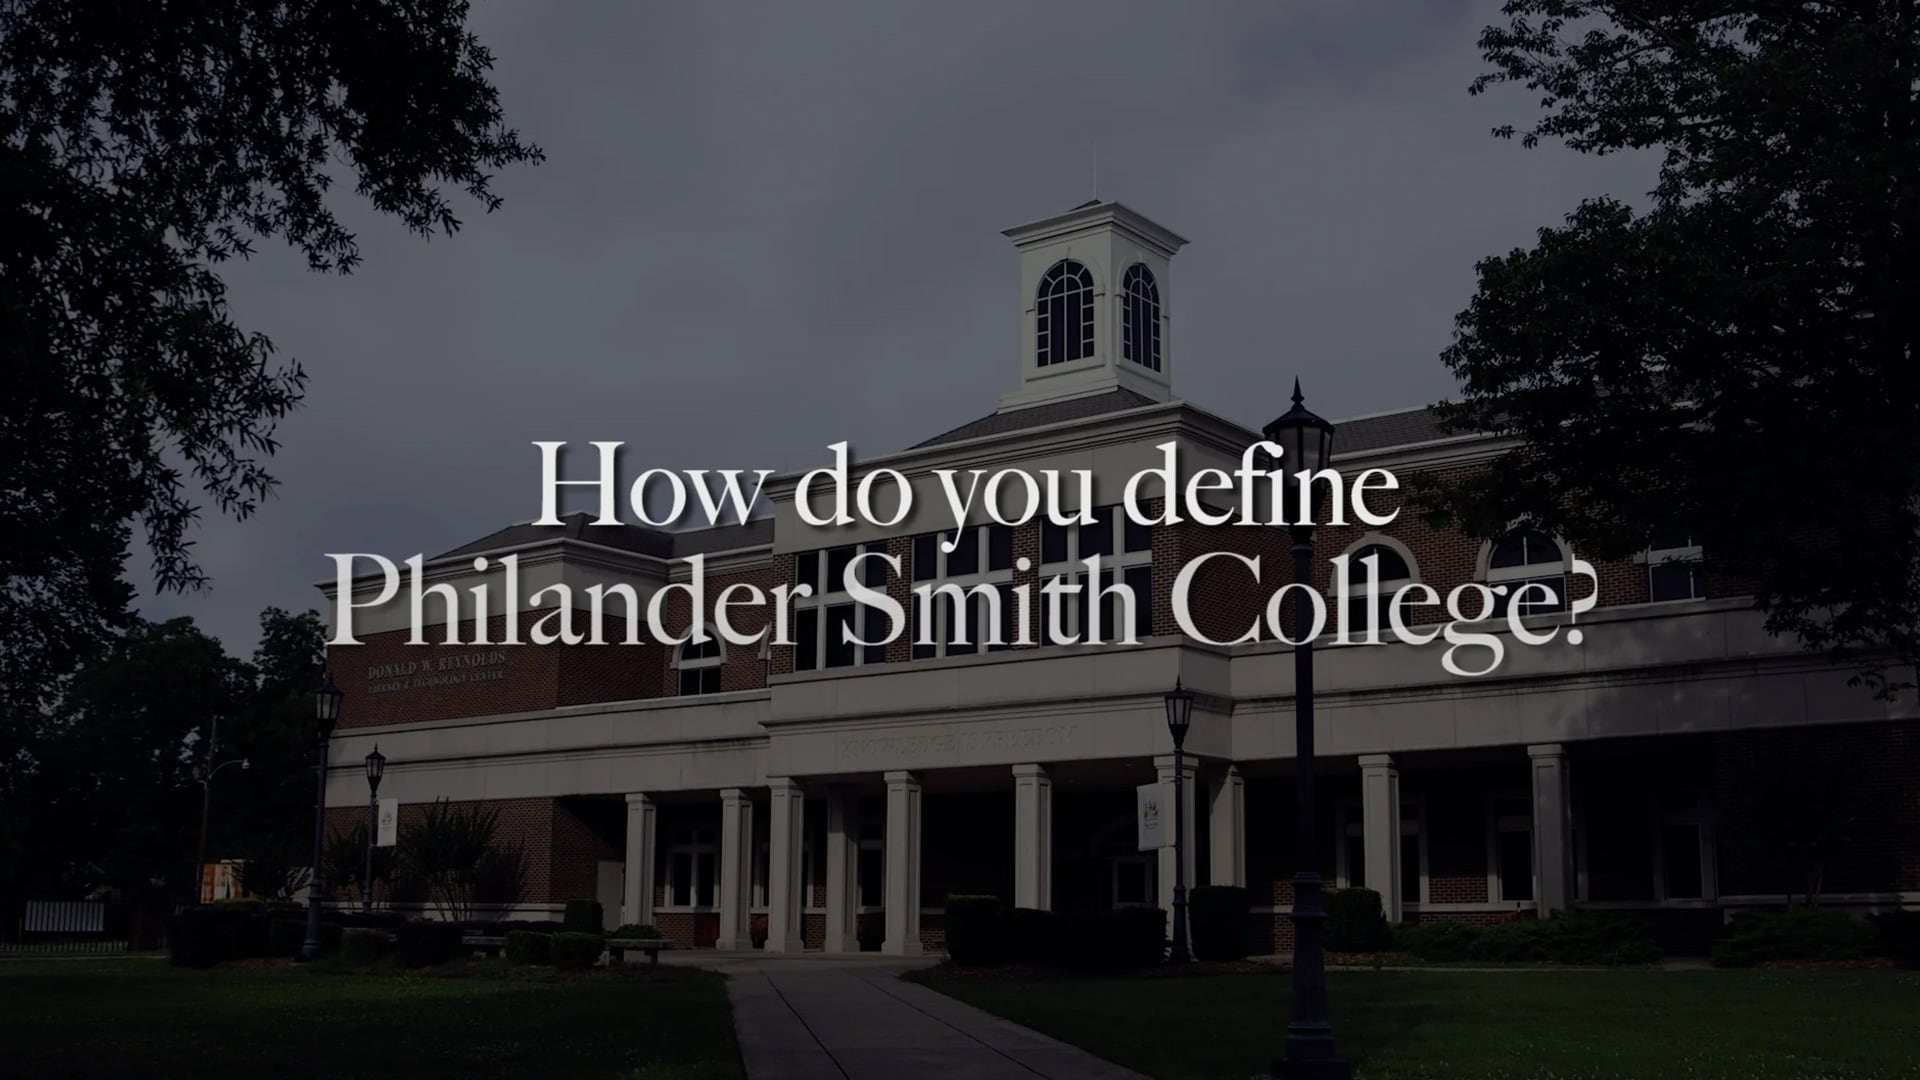 Video: How Do You Define Philander Smith College?